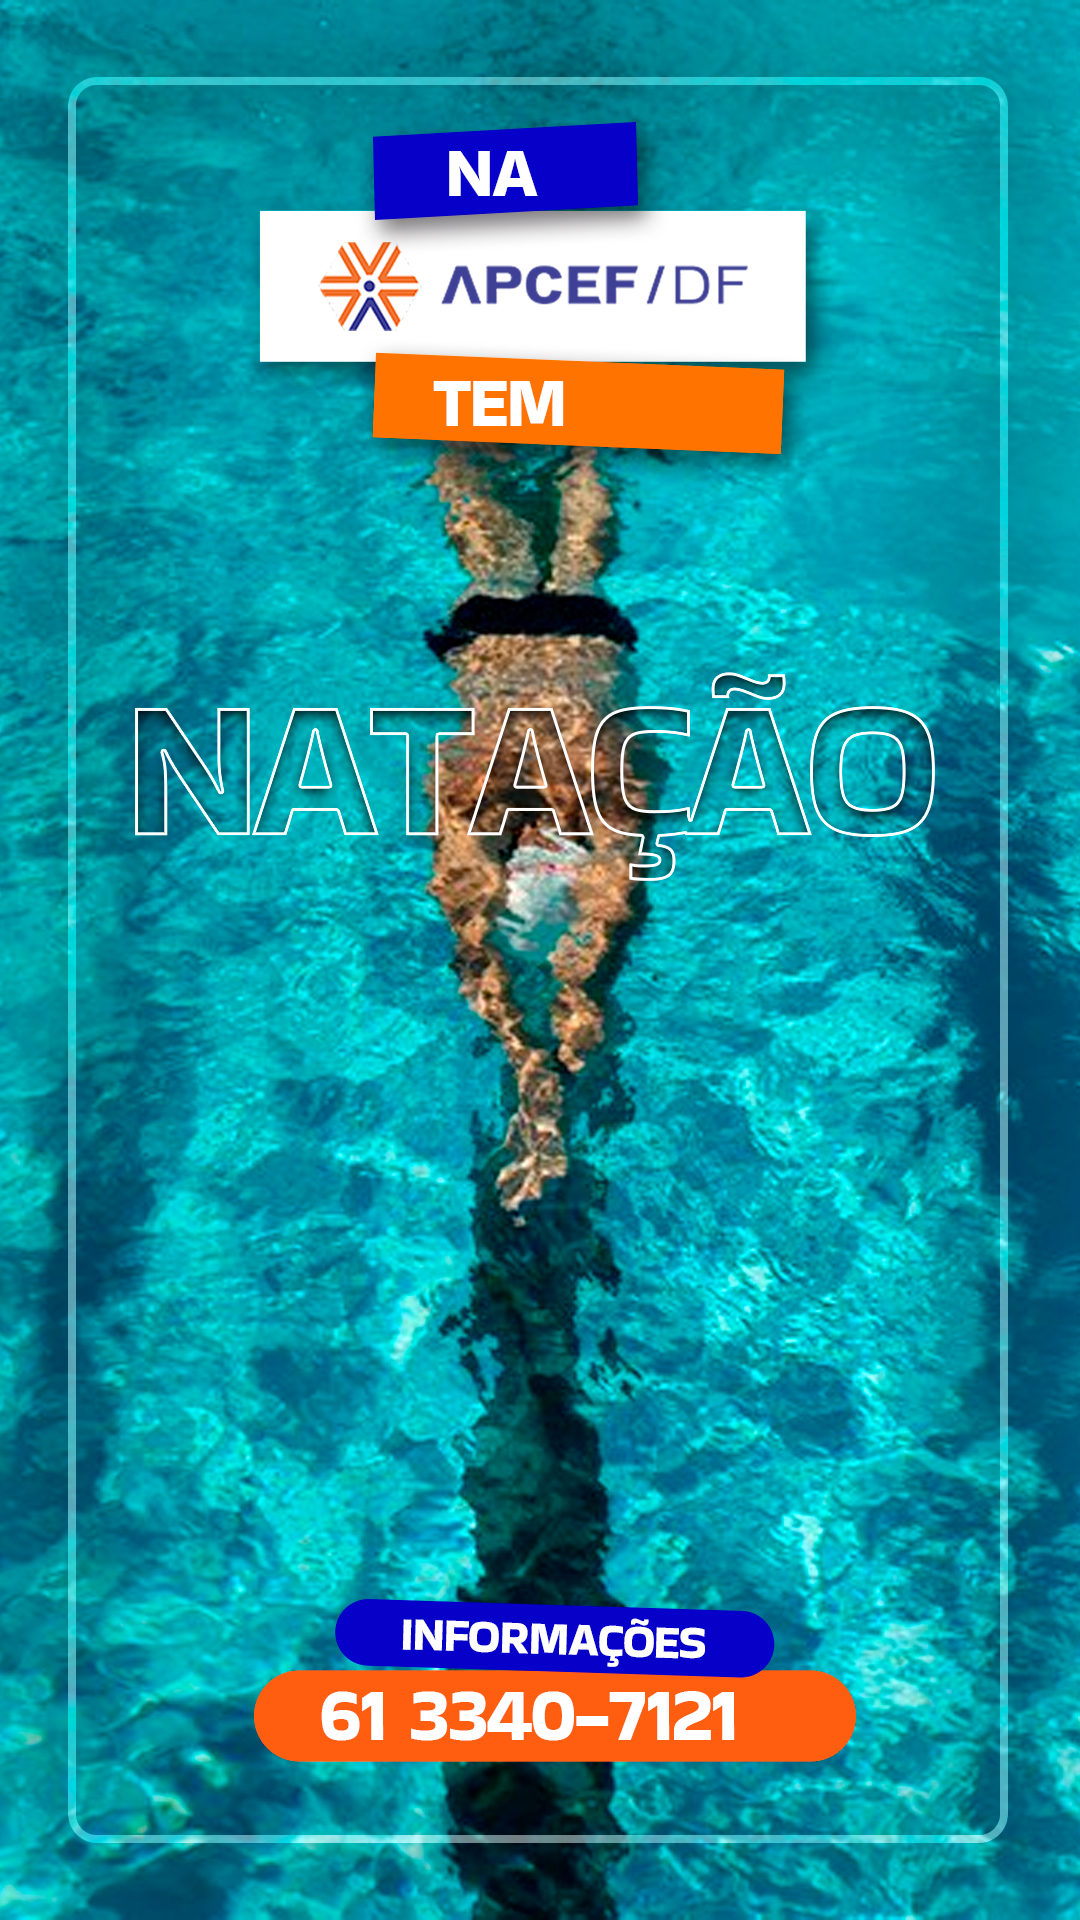 NATACAO-1080X1920.jpg